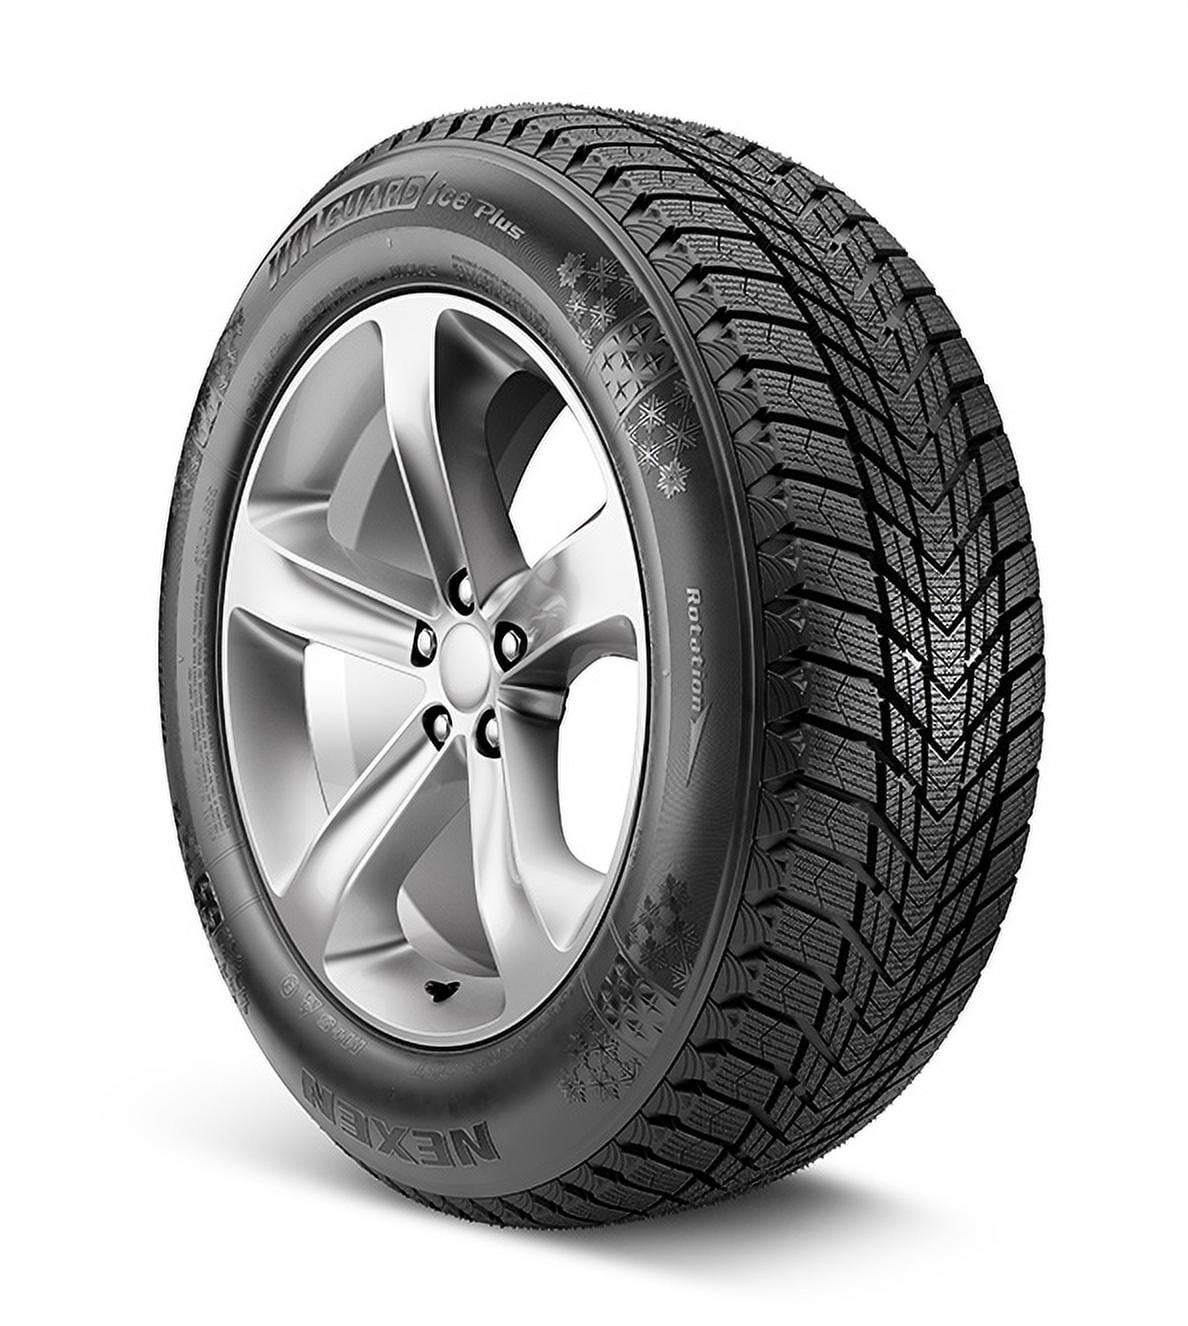 Nexen Euro-Win 600 Studable-Winter Radial Tire 195/75R16 105R 